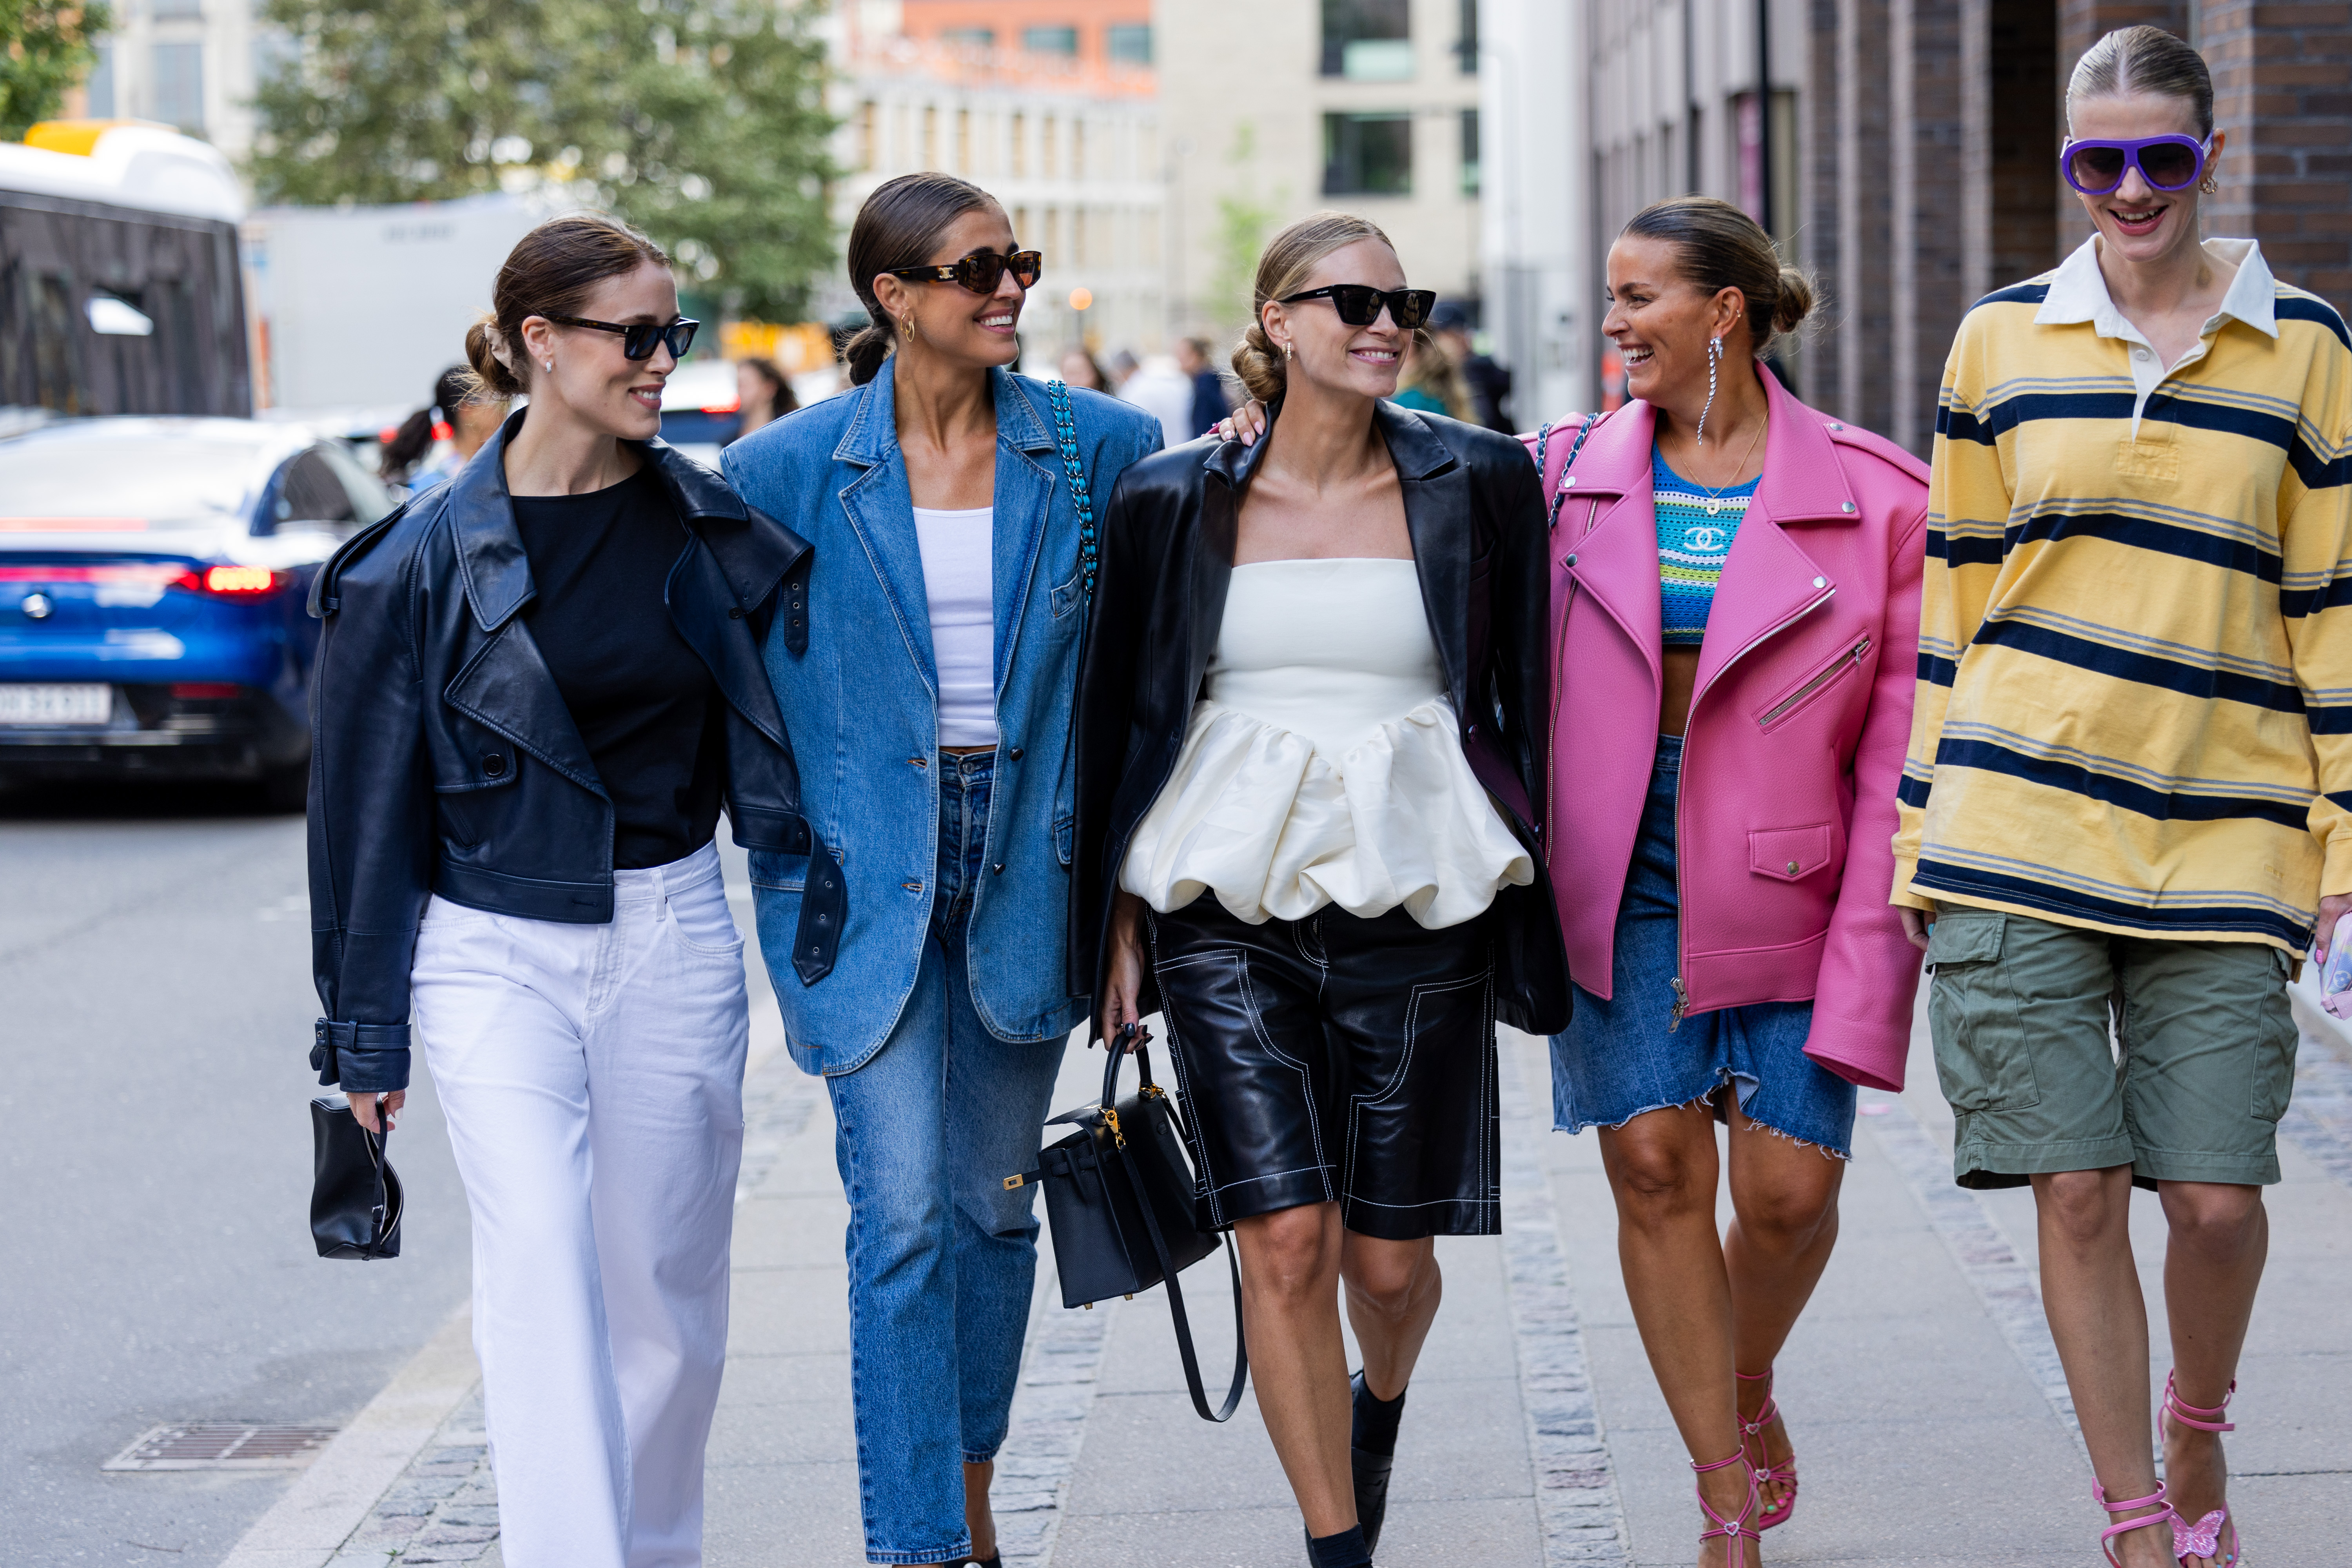 The Best Street Style From Copenhagen Fashion Week Spring-Summer 2024